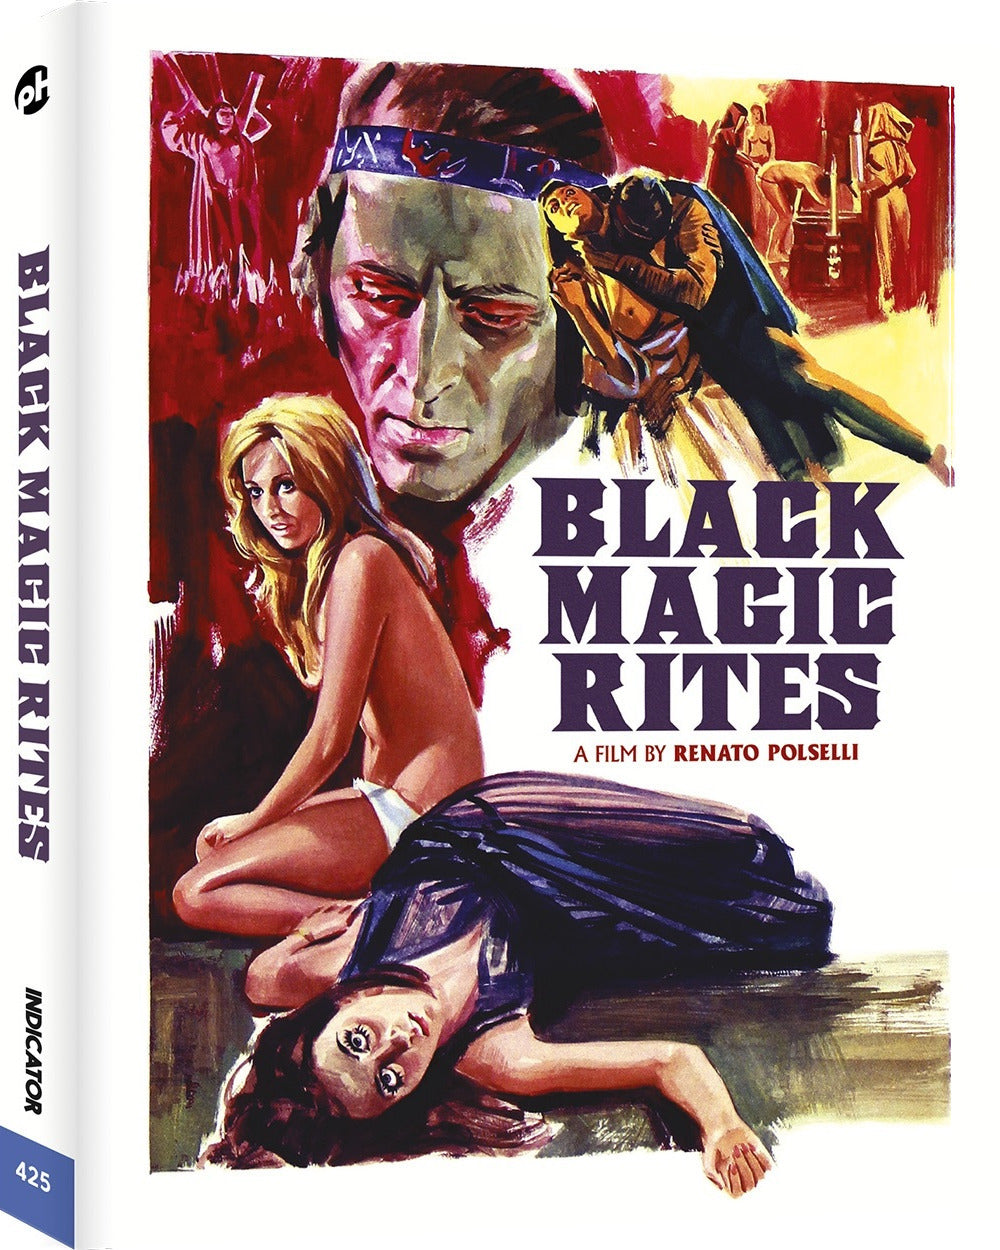 BLACK MAGIC RITES (LIMITED EDITION) BLU-RAY